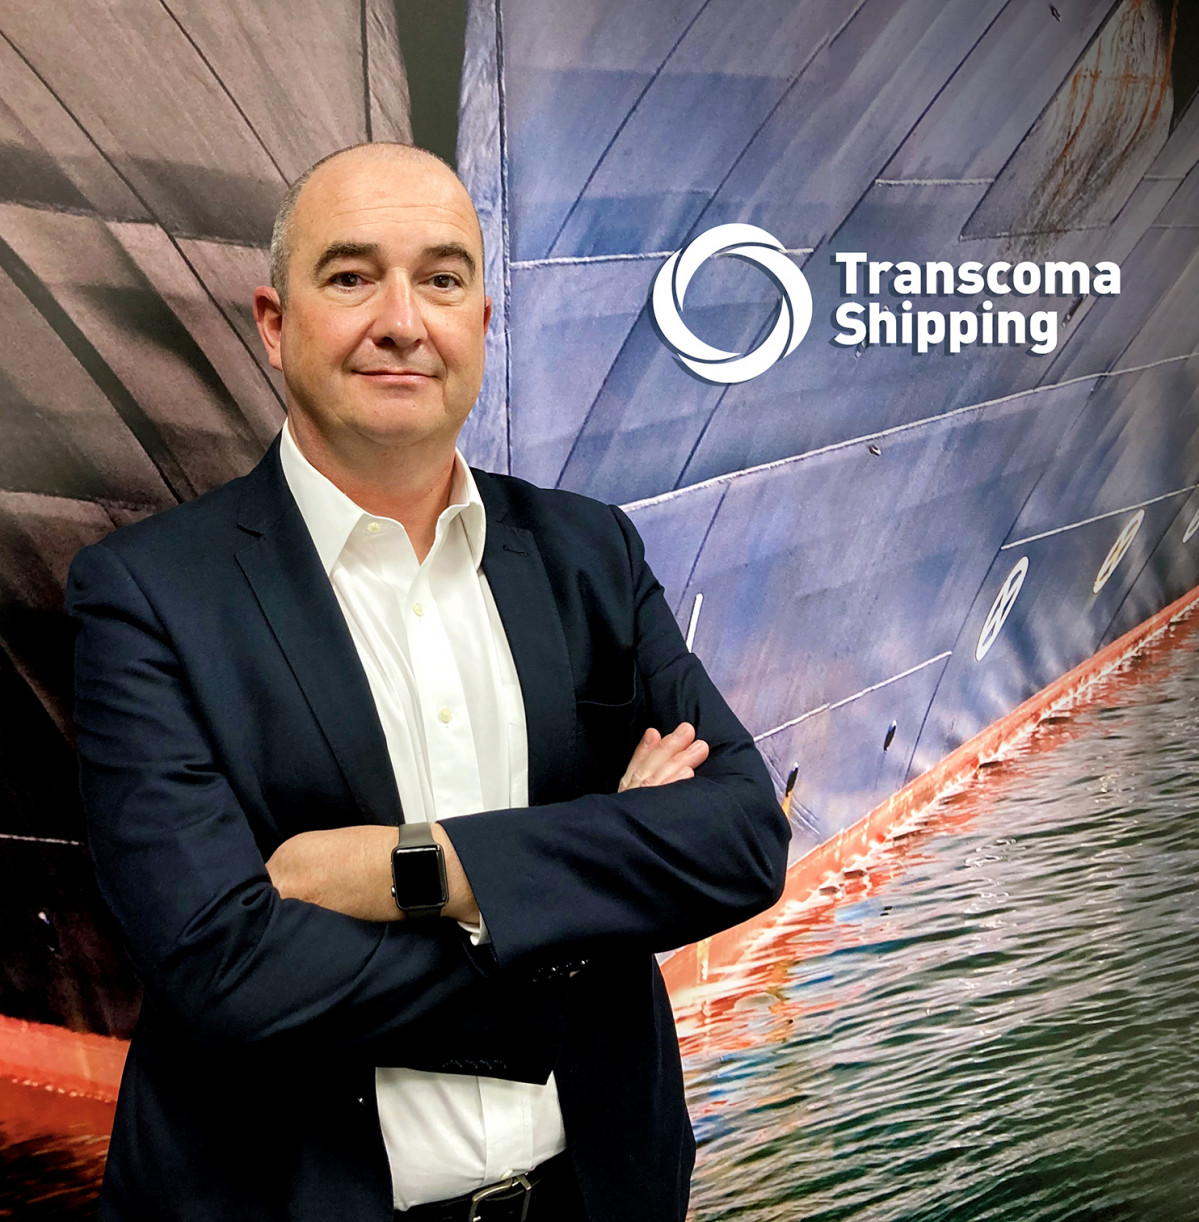 Transcoma Shipping   Jordi Casals